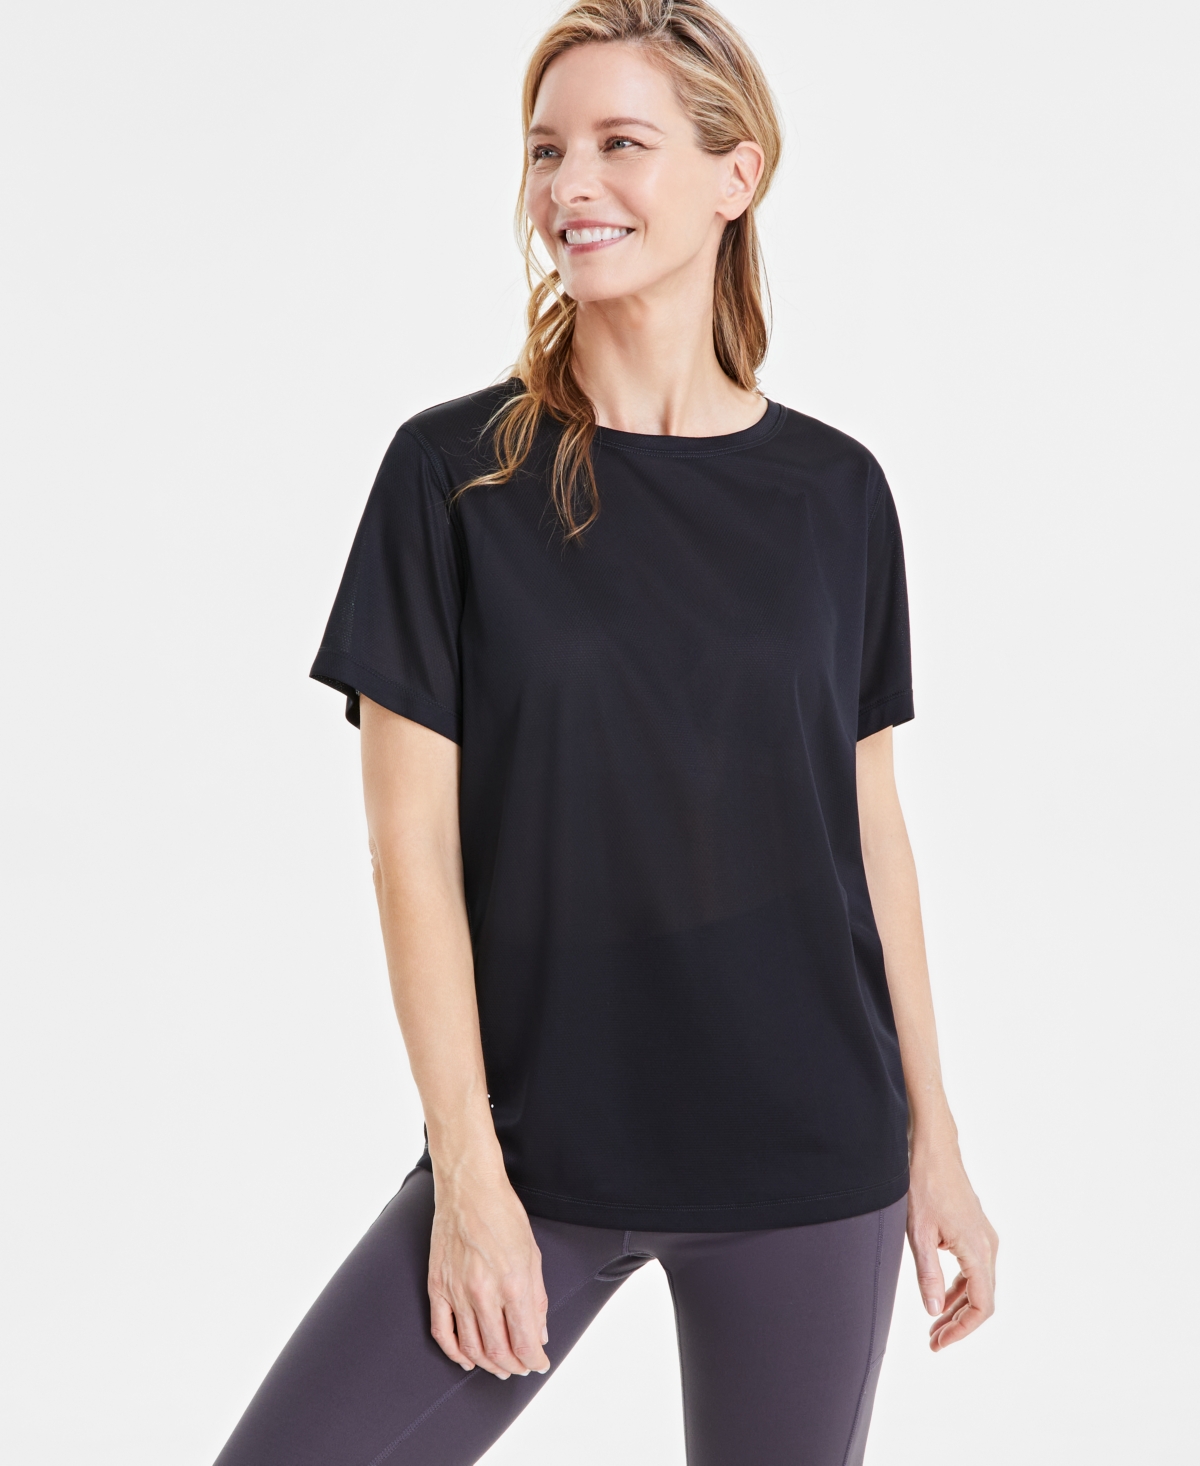 Women's Birdseye Mesh Short-Sleeve T-Shirt, Created for Macy's - Pink Icing